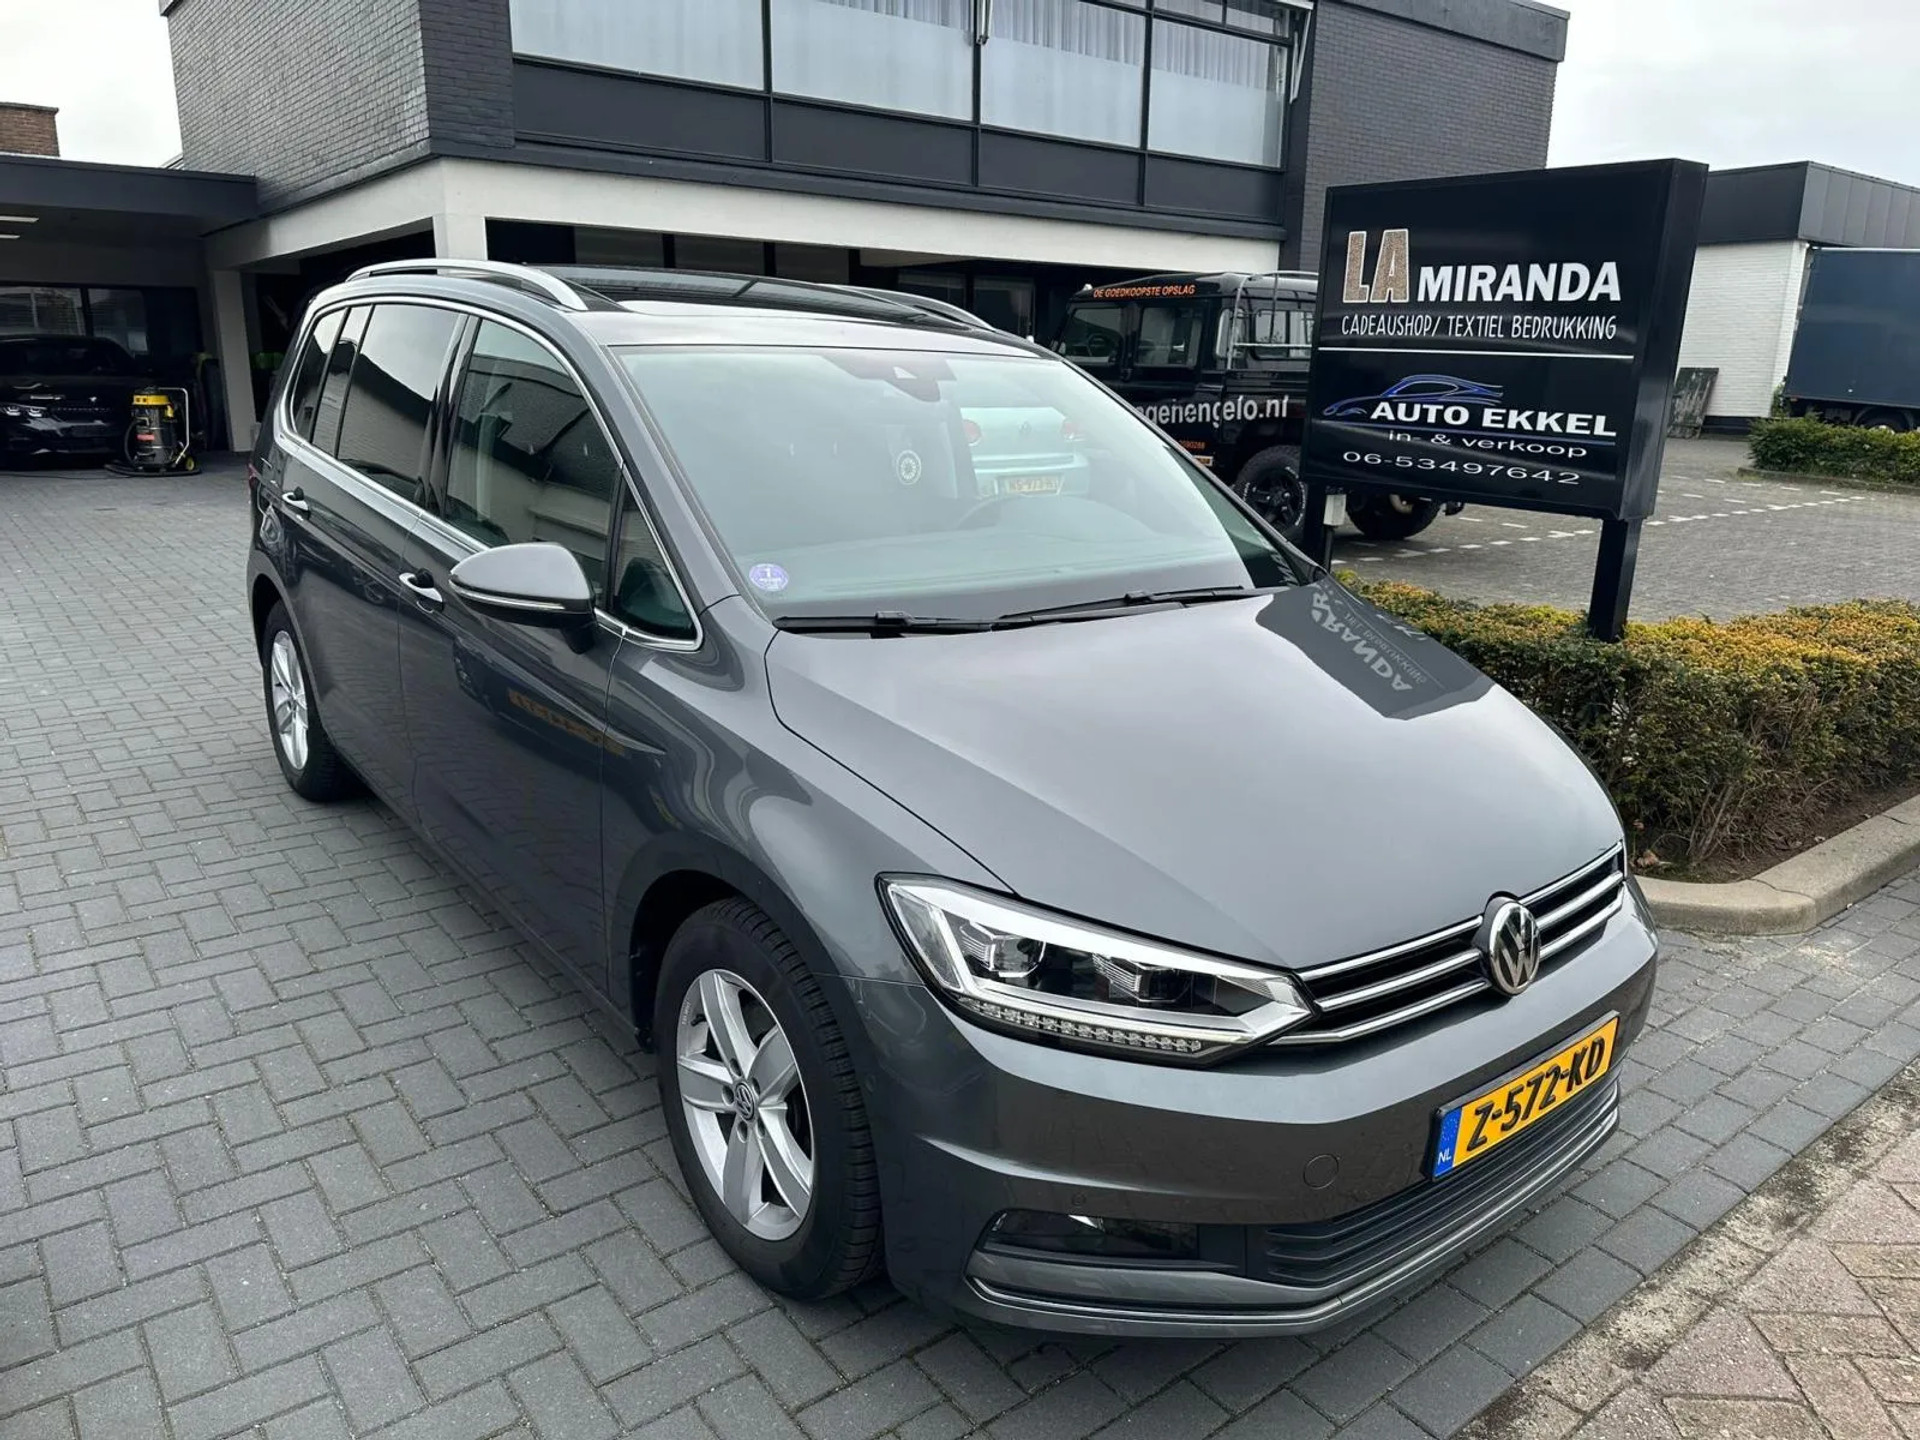 Volkswagen-Touran-fairautolease.nl